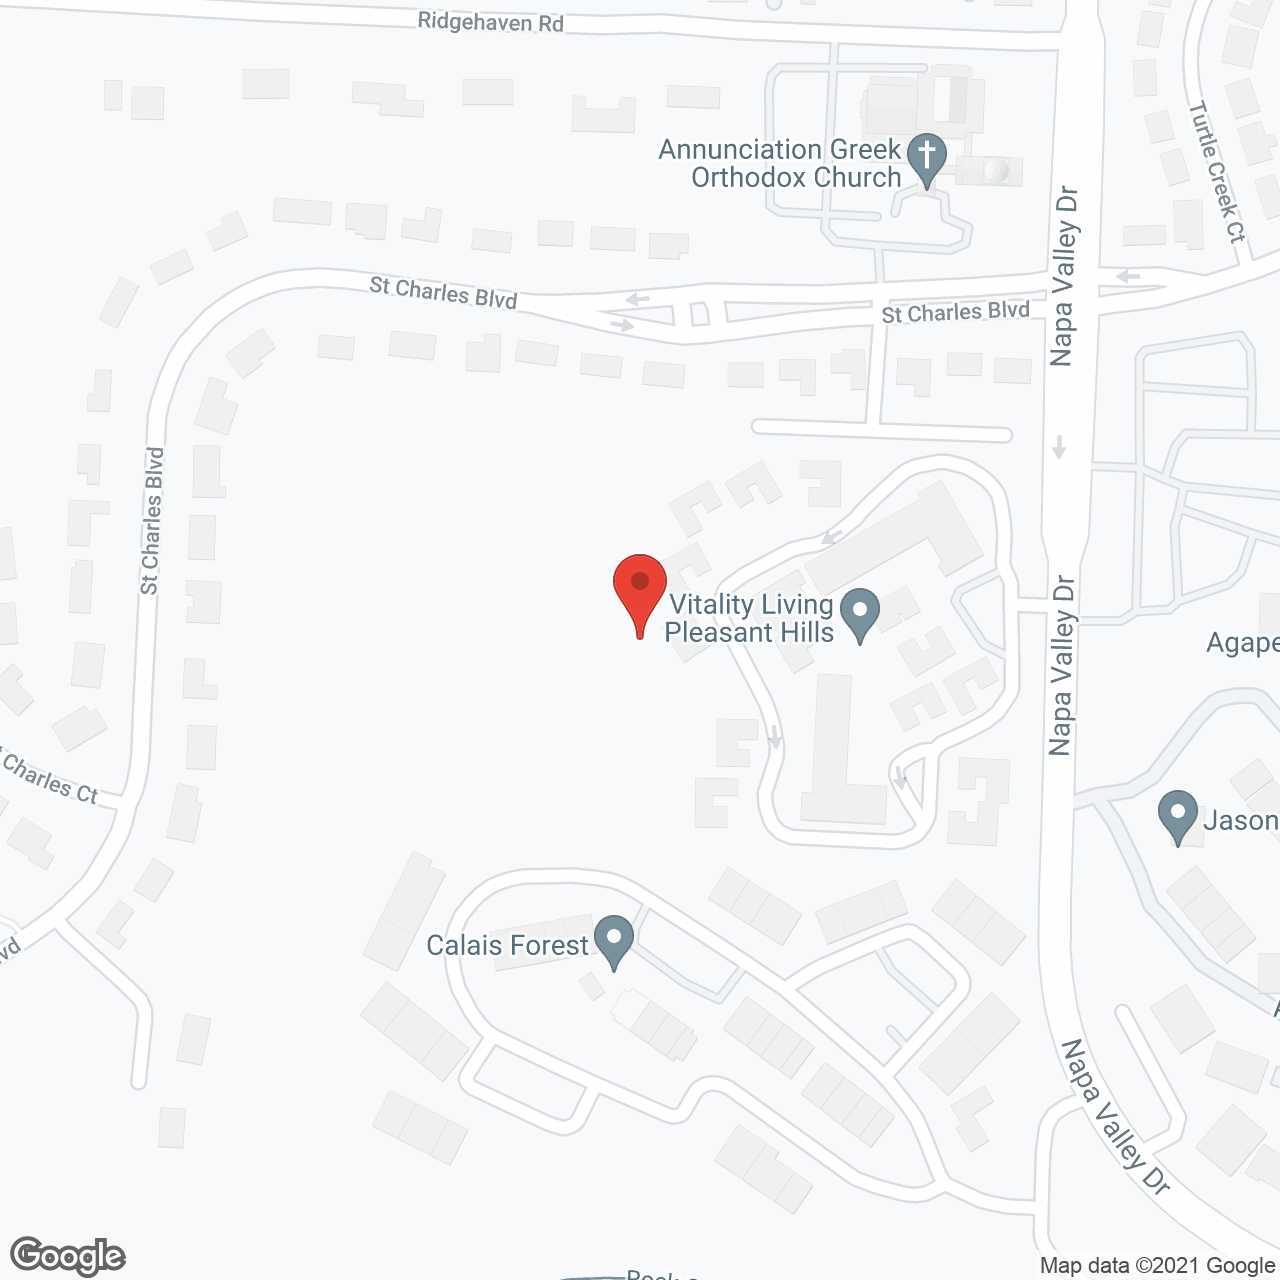 Vitality Living Pleasant Hills in google map